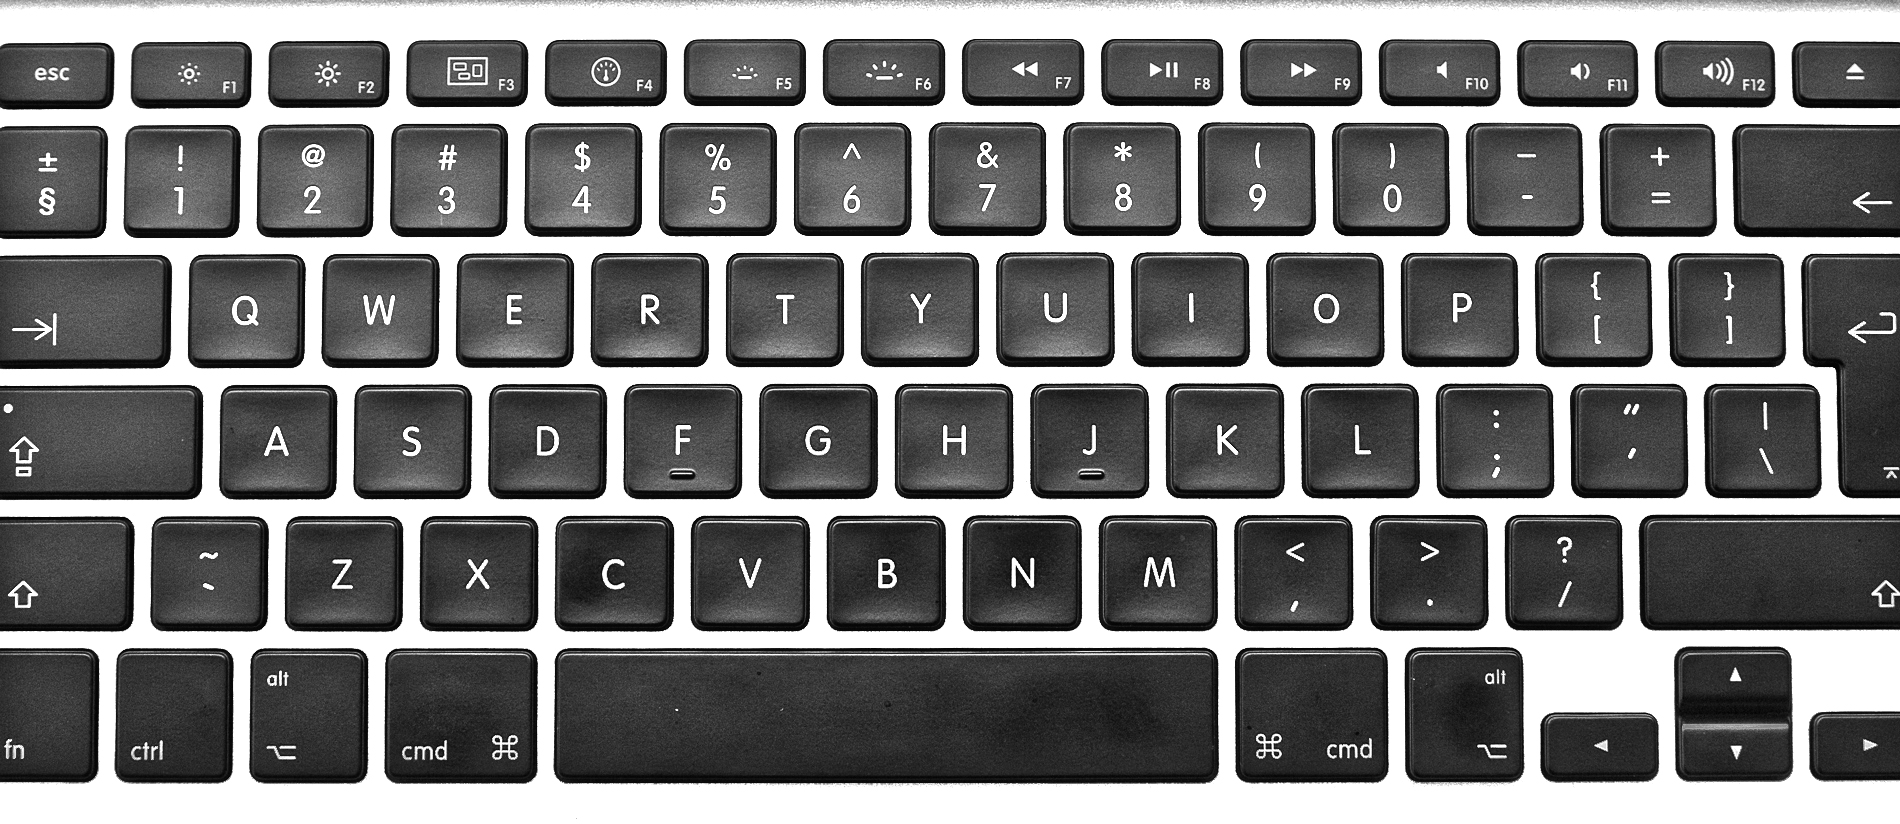 keyboard layout clipart - photo #32